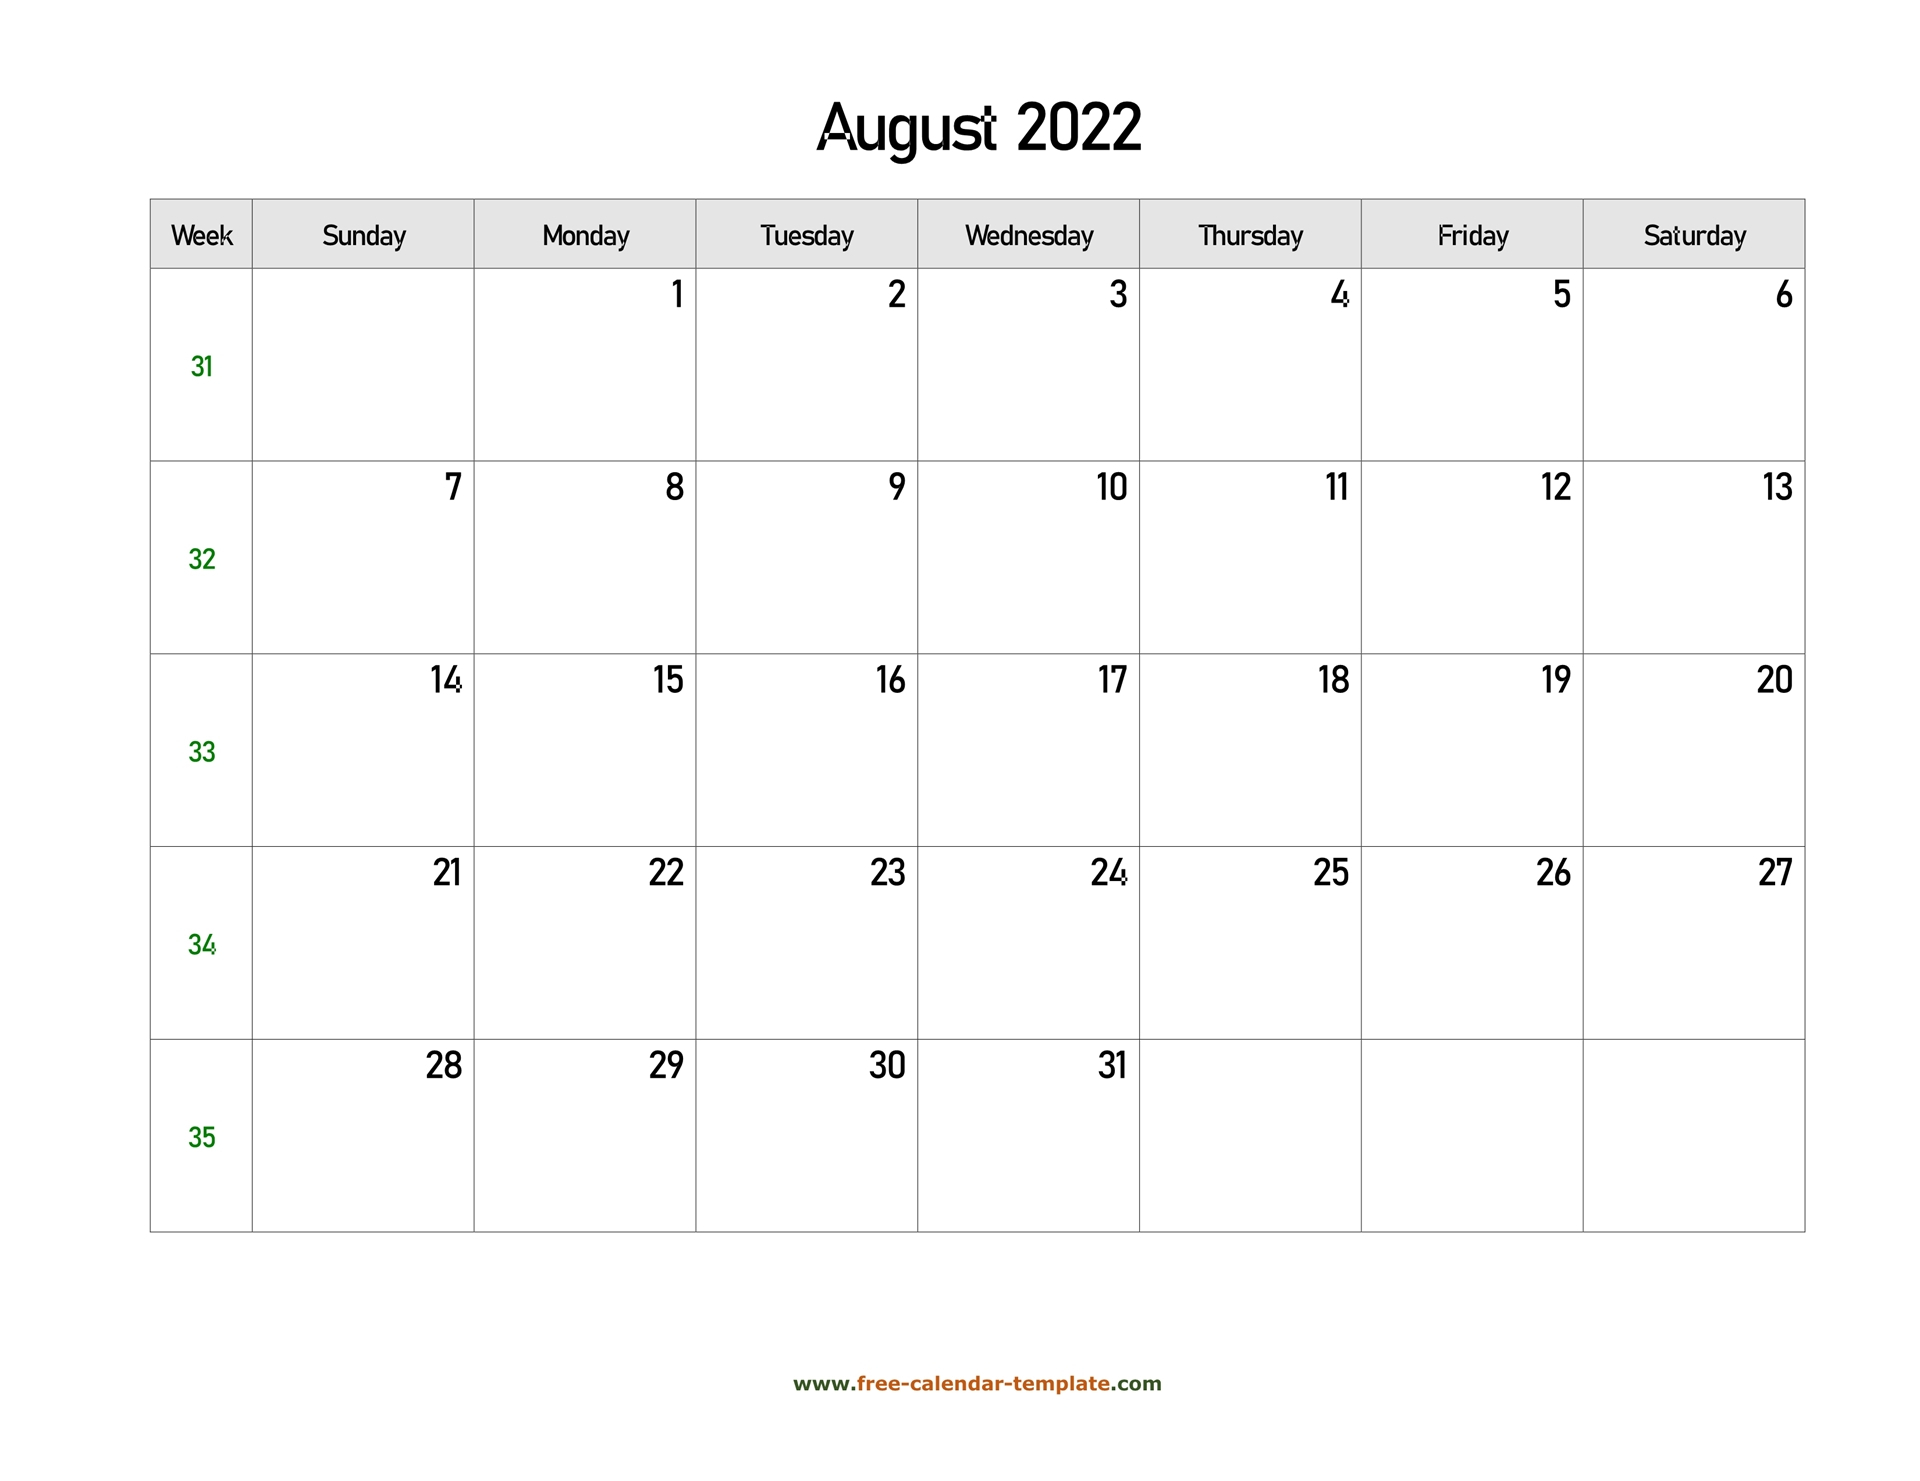 Free 2022 Calendar Blank August Template (Horizontal